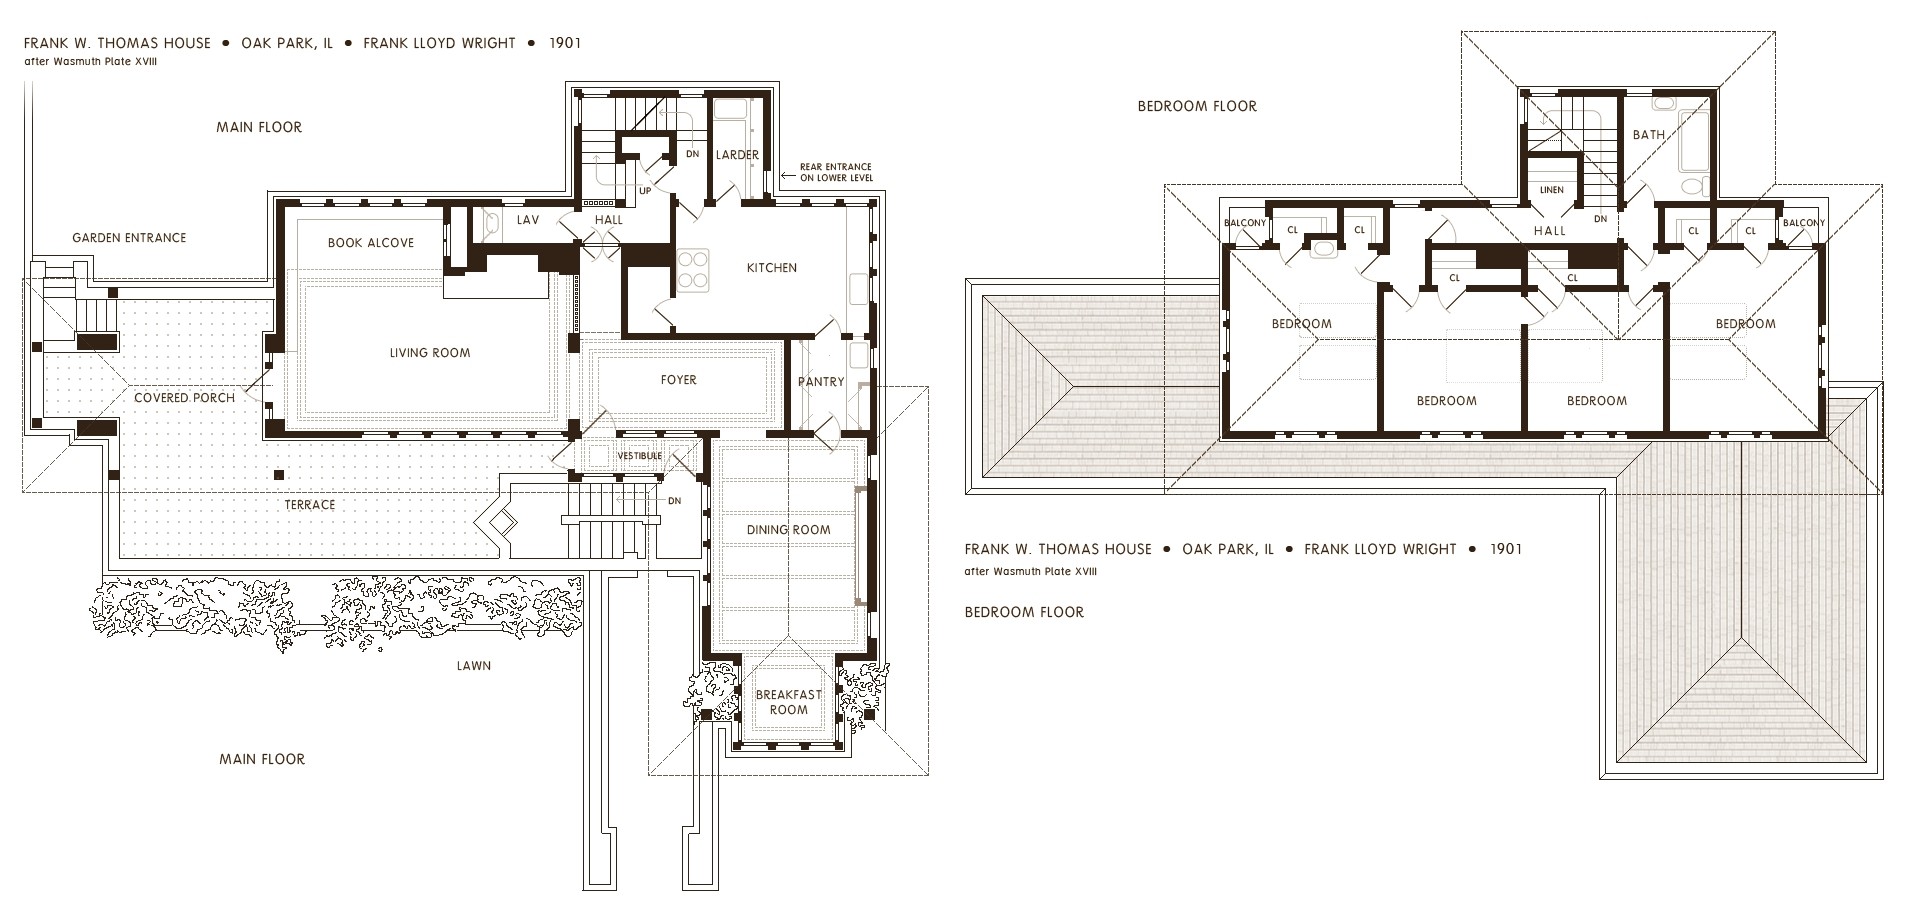 The floor plan of the Frank Thomas House by Frank Lloyd